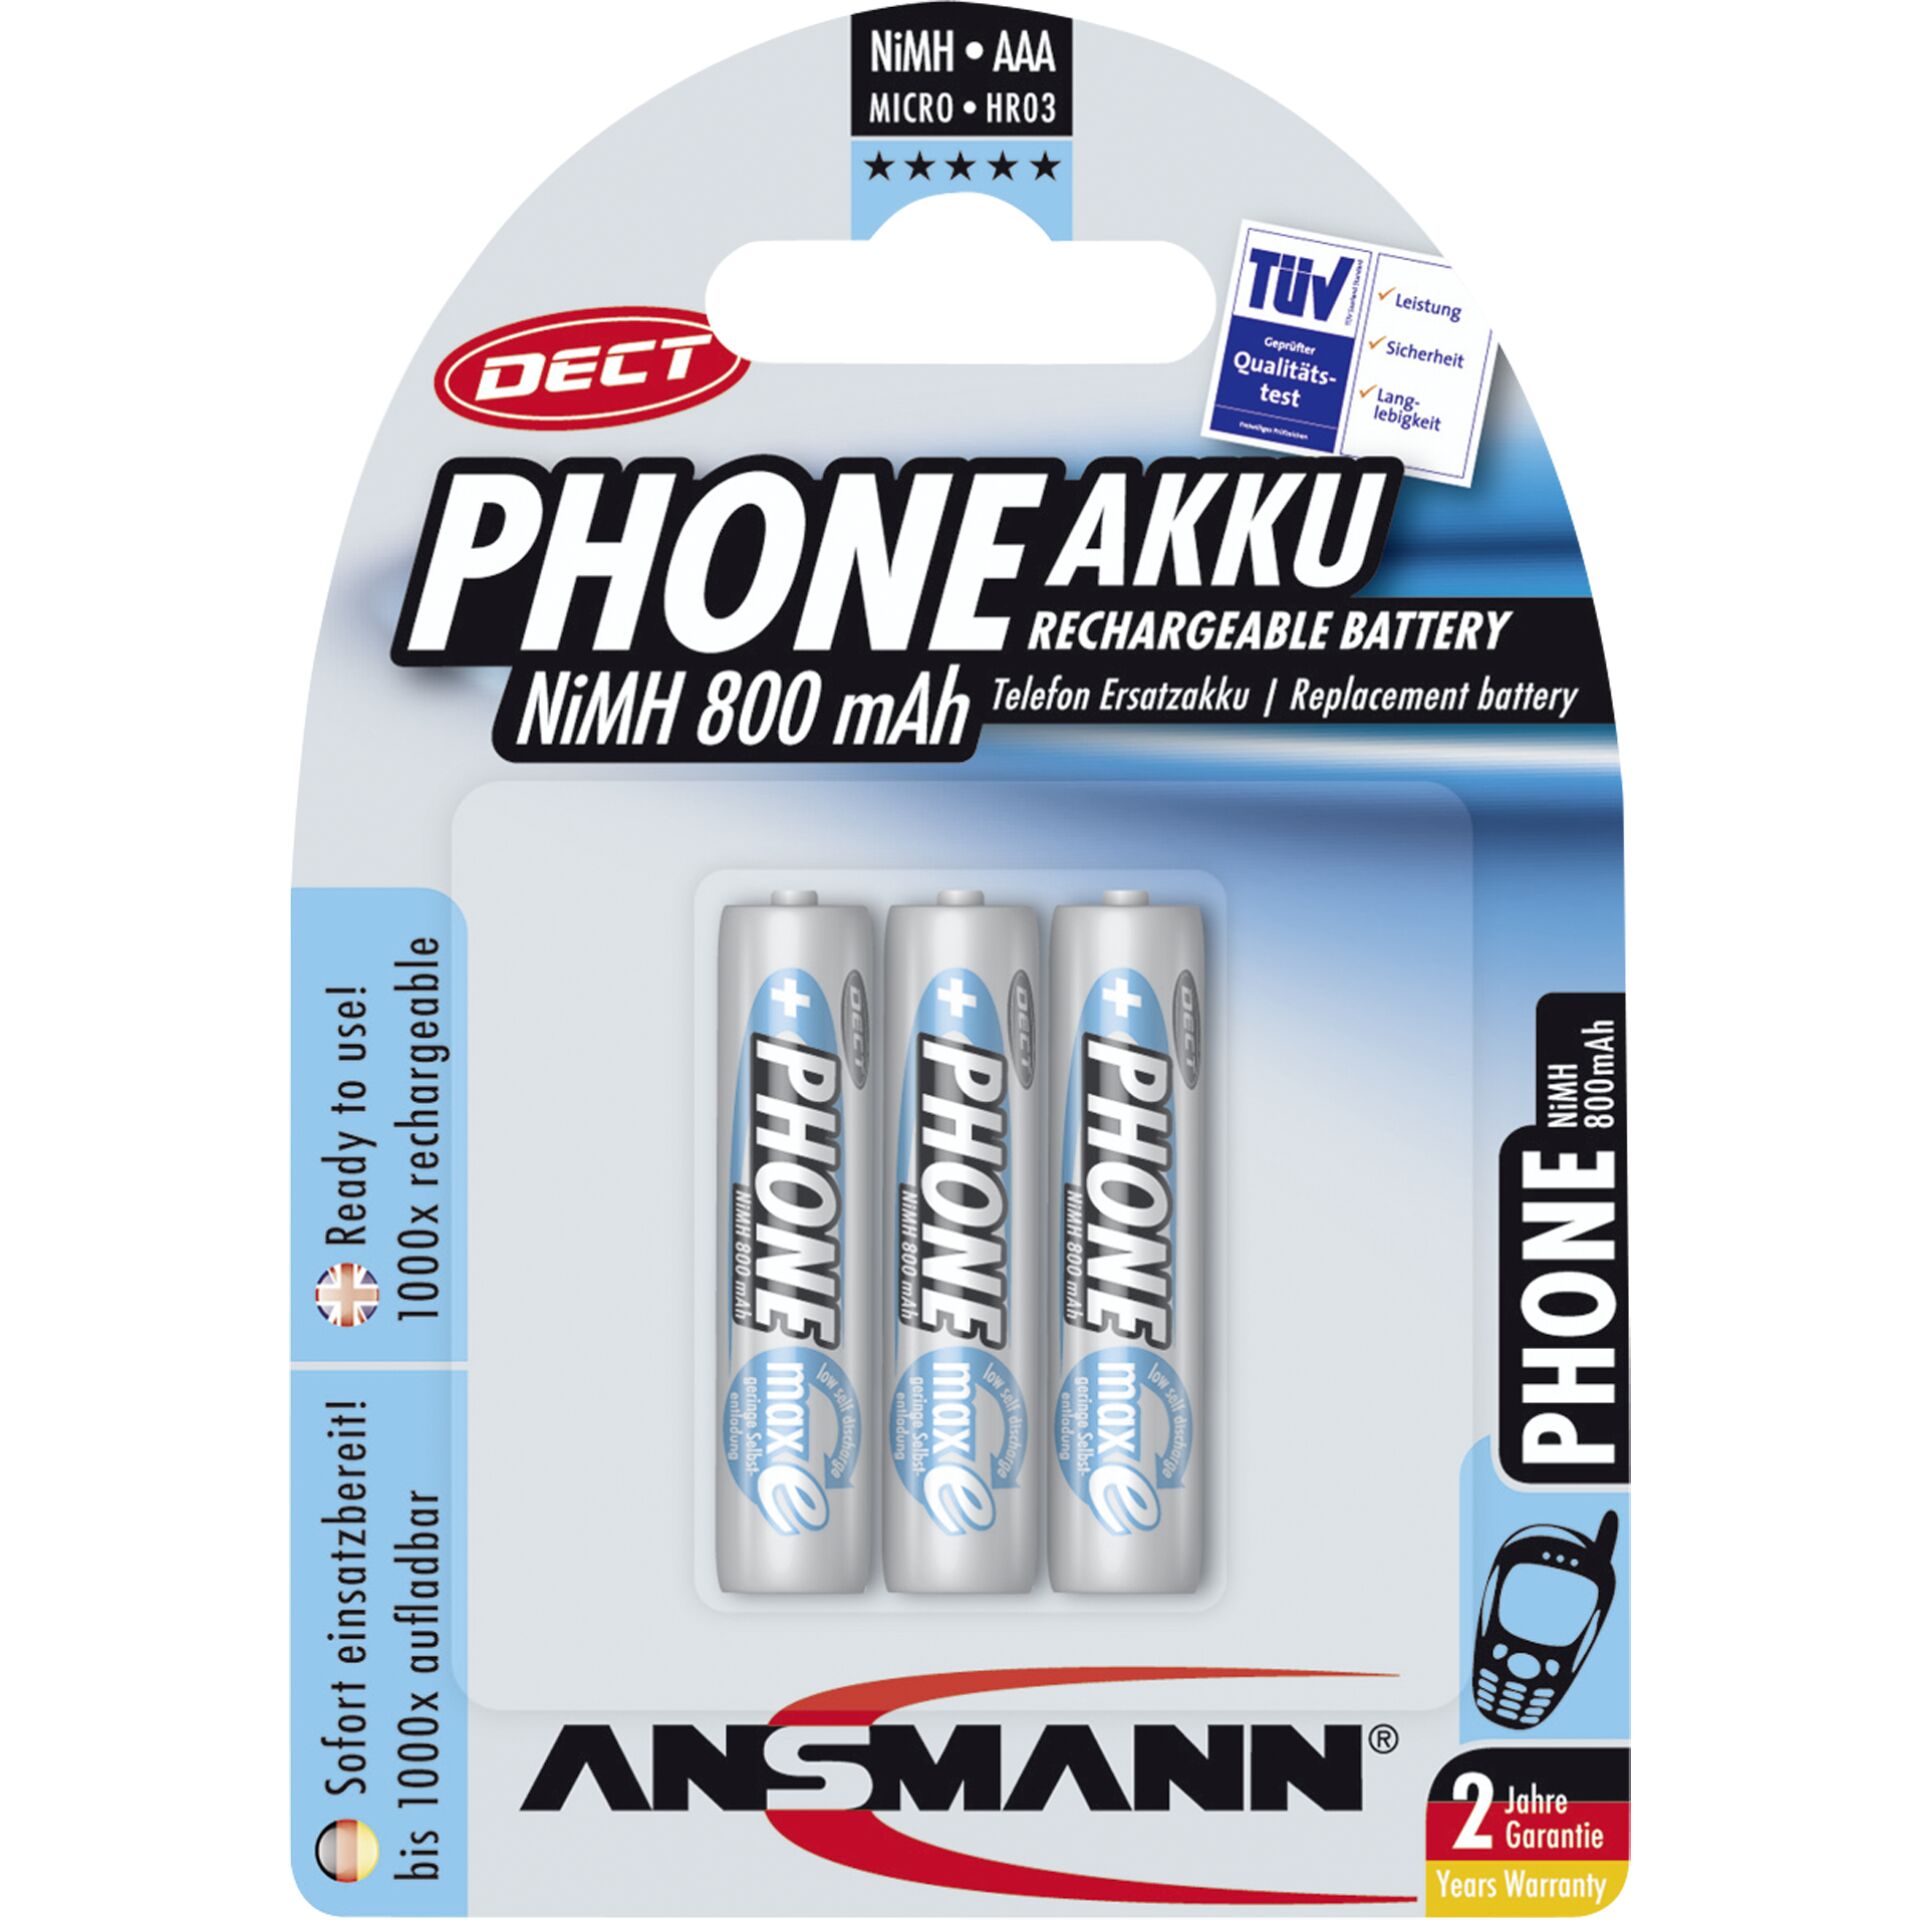 1x3 Ansmann maxE NiMH batteria Micro AAA 800 mAh DECT PHONE